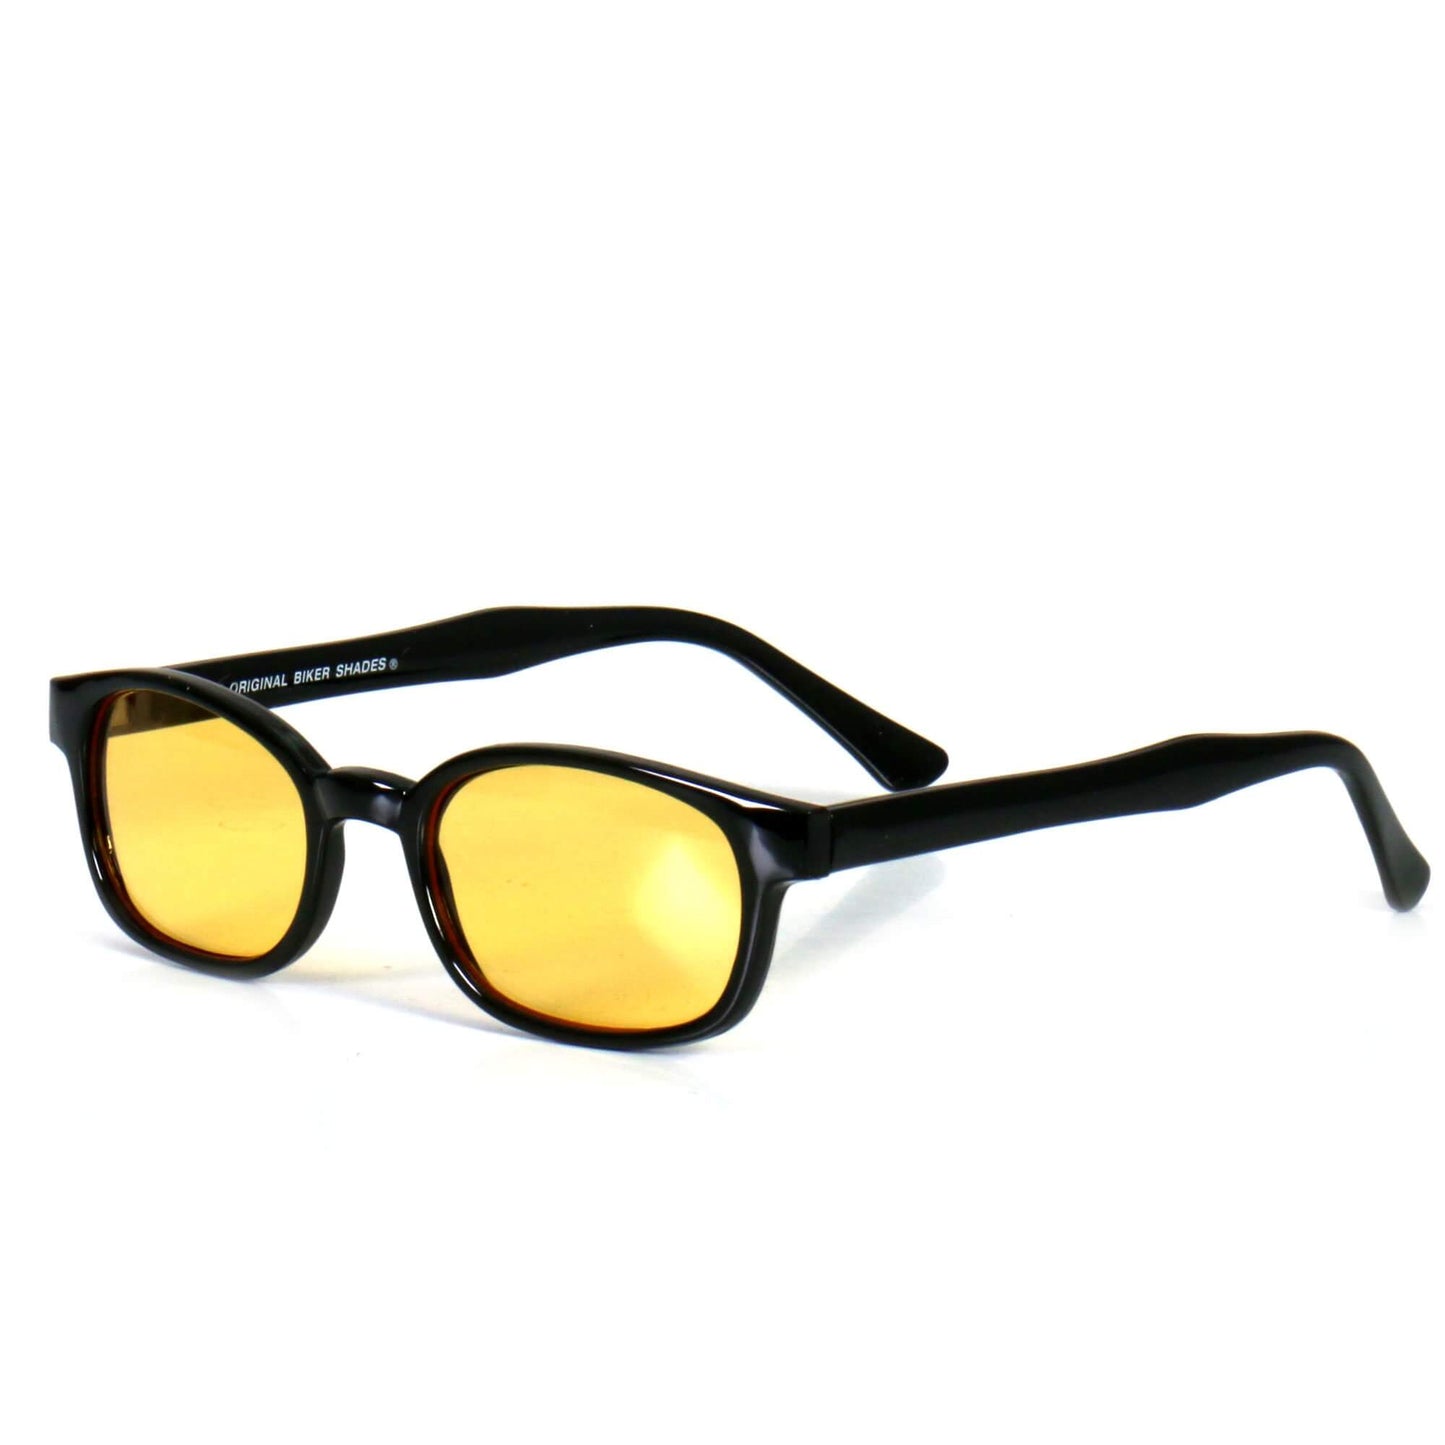 KD's Sunglasses - Yellow Lenses